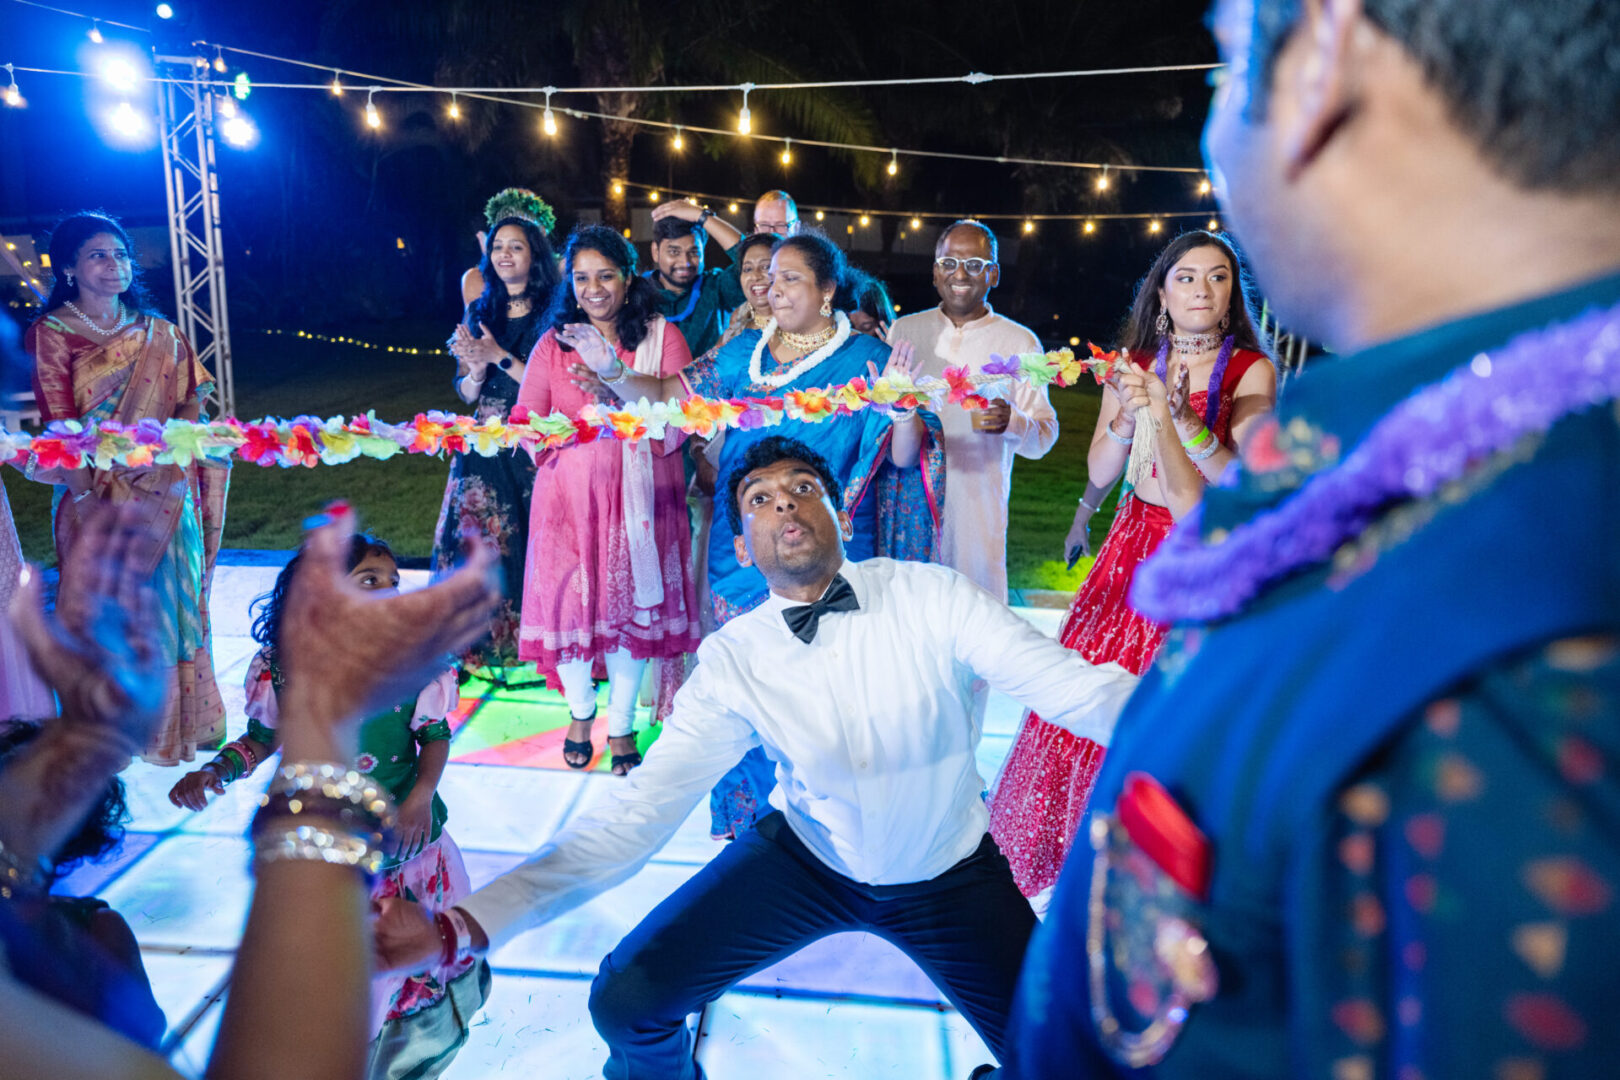 Lit party at Indian wedding Punta Cana